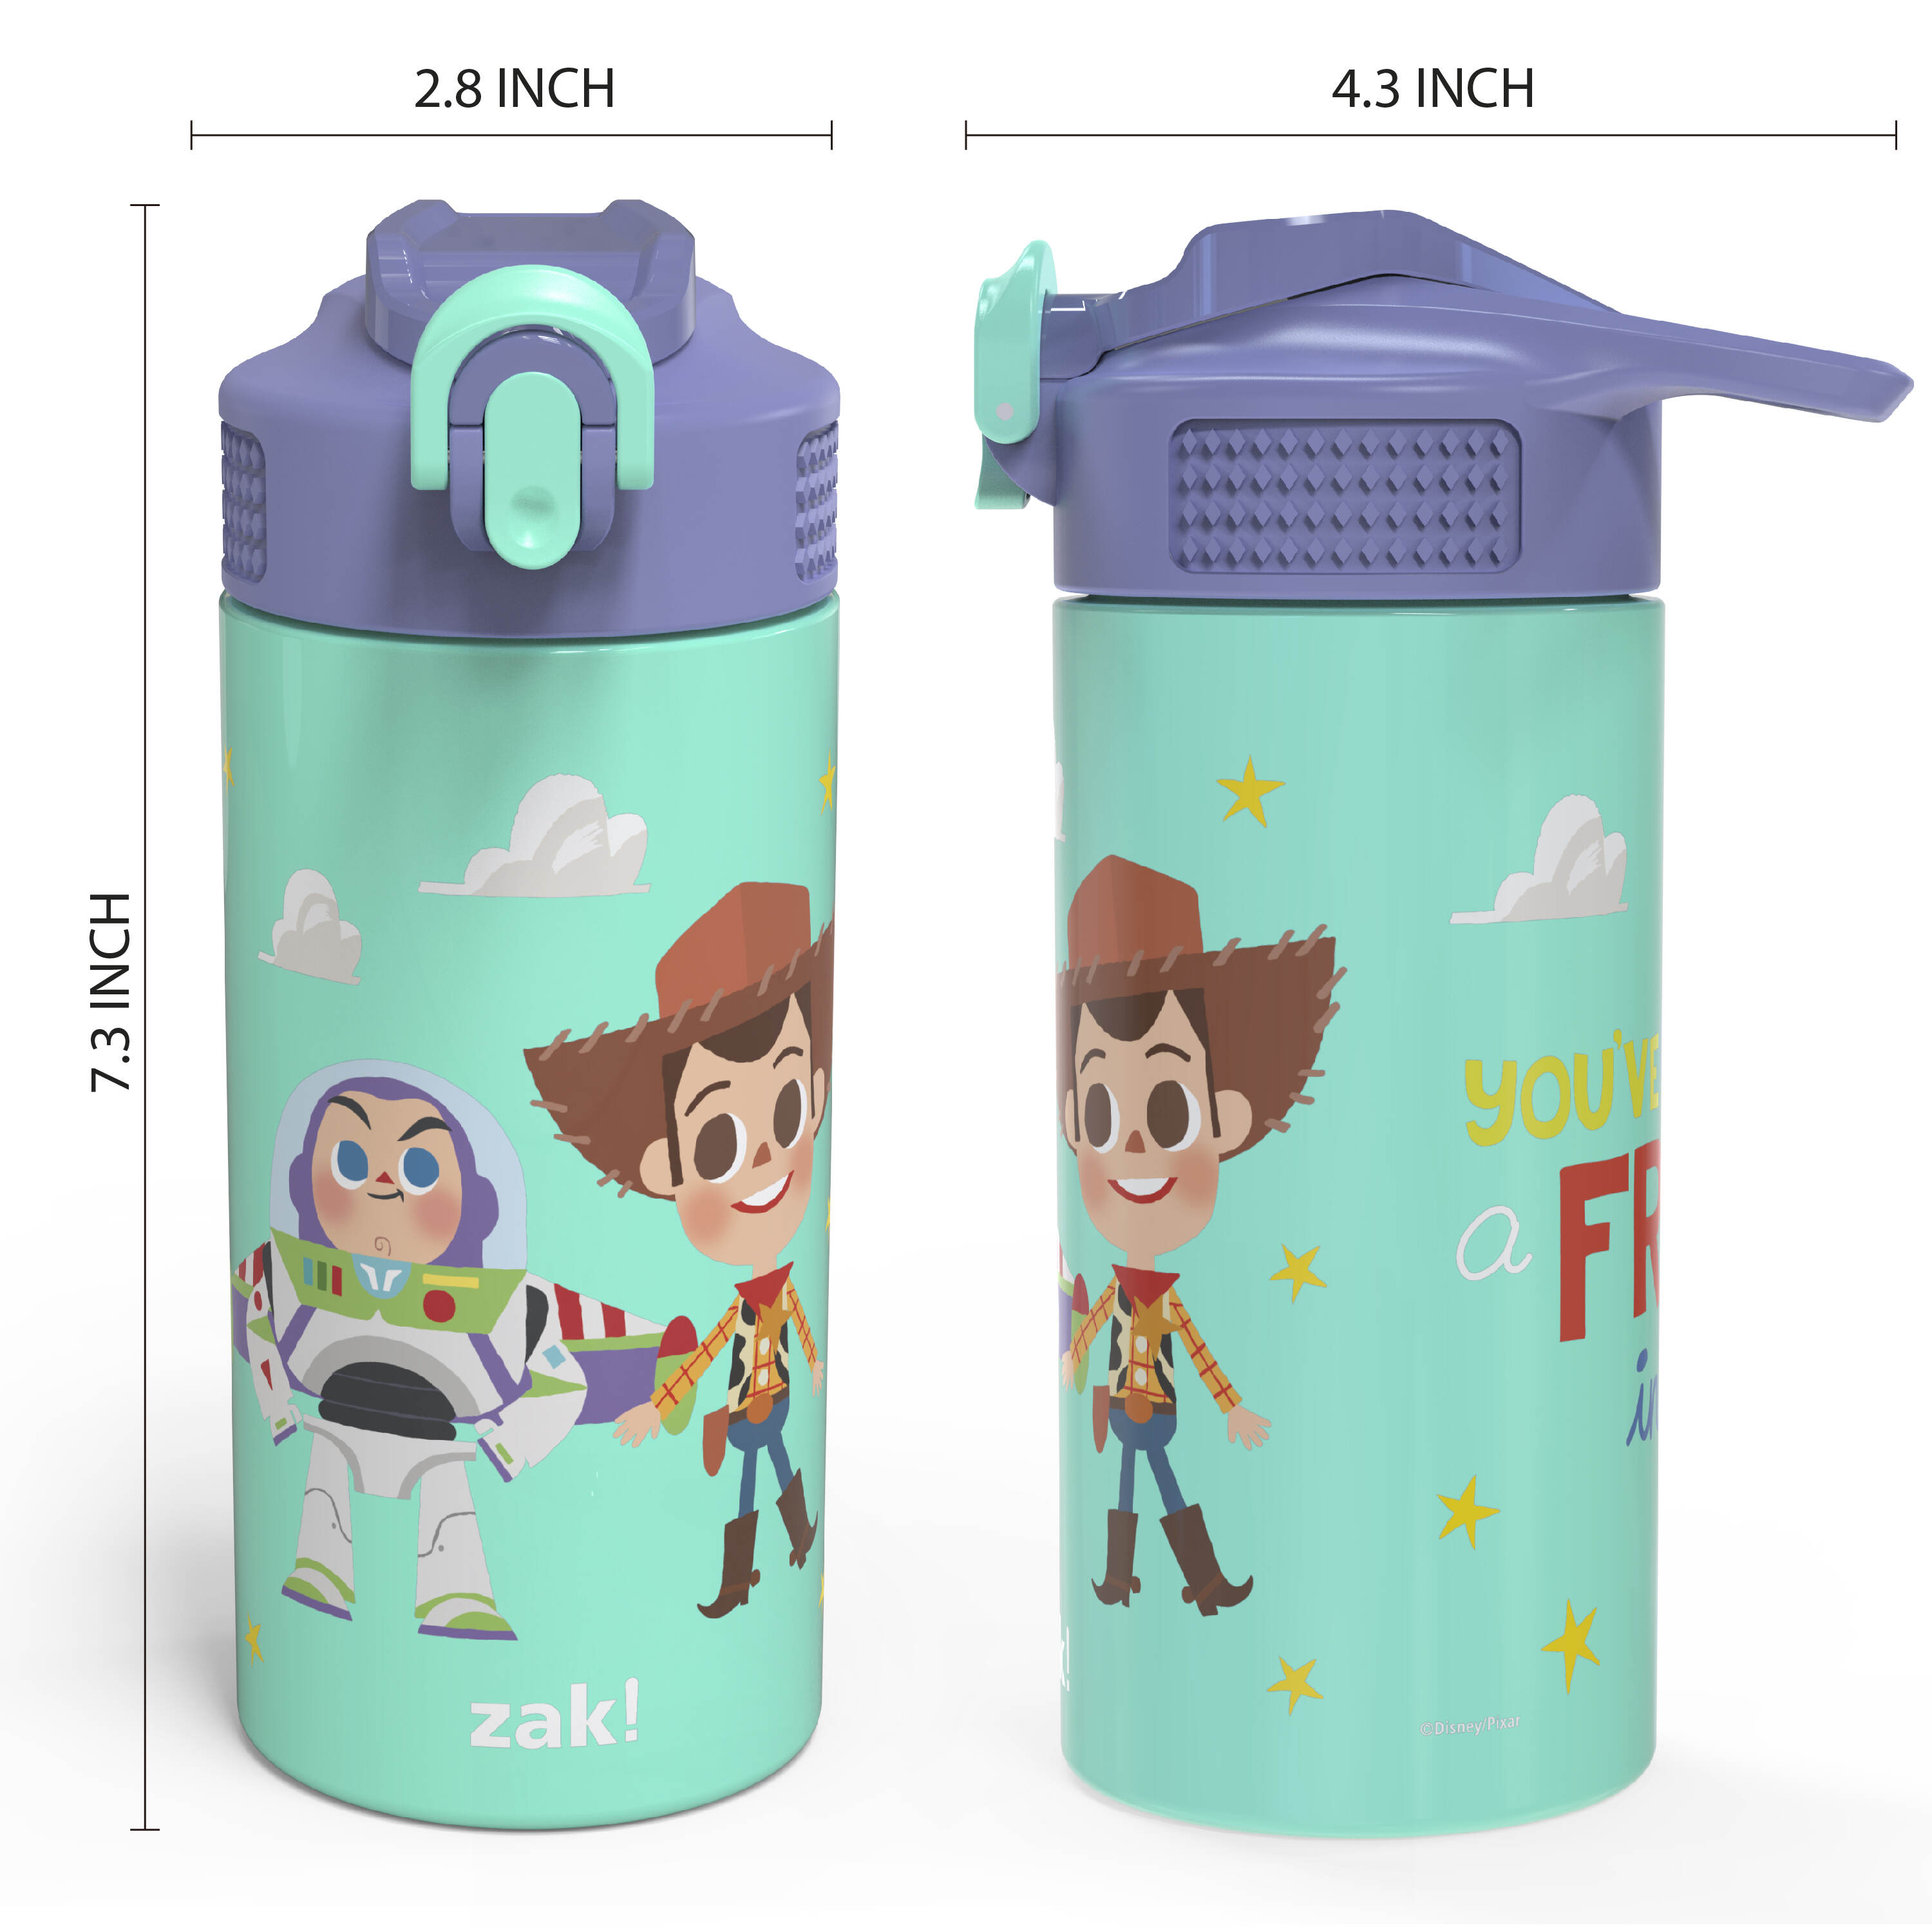 disney and pixar buzz and woody 14 oz water bottle B0912N6HK4 / zak! designs